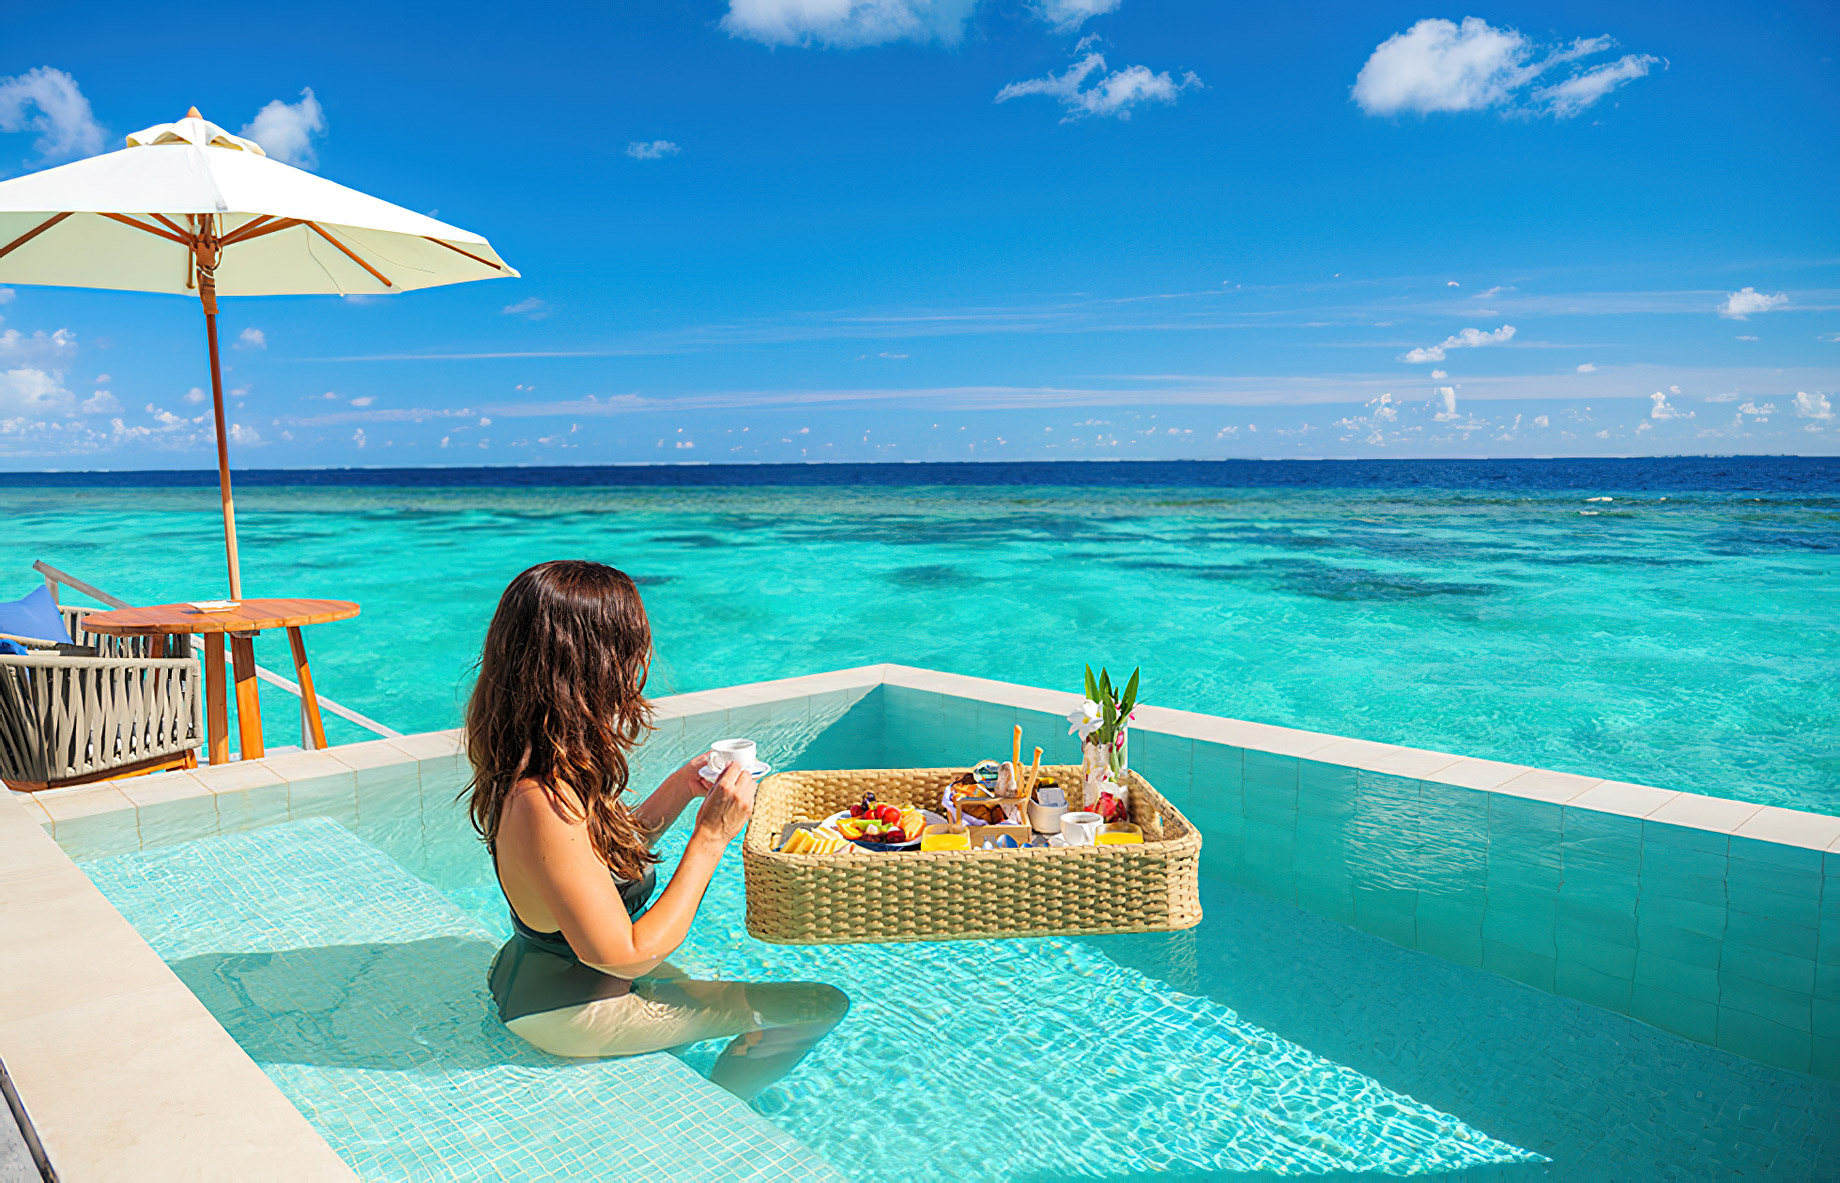 Baglioni Resort Maldives – Maagau Island, Rinbudhoo, Maldives – Overwater Villa Pool Floating Breakfast Basket